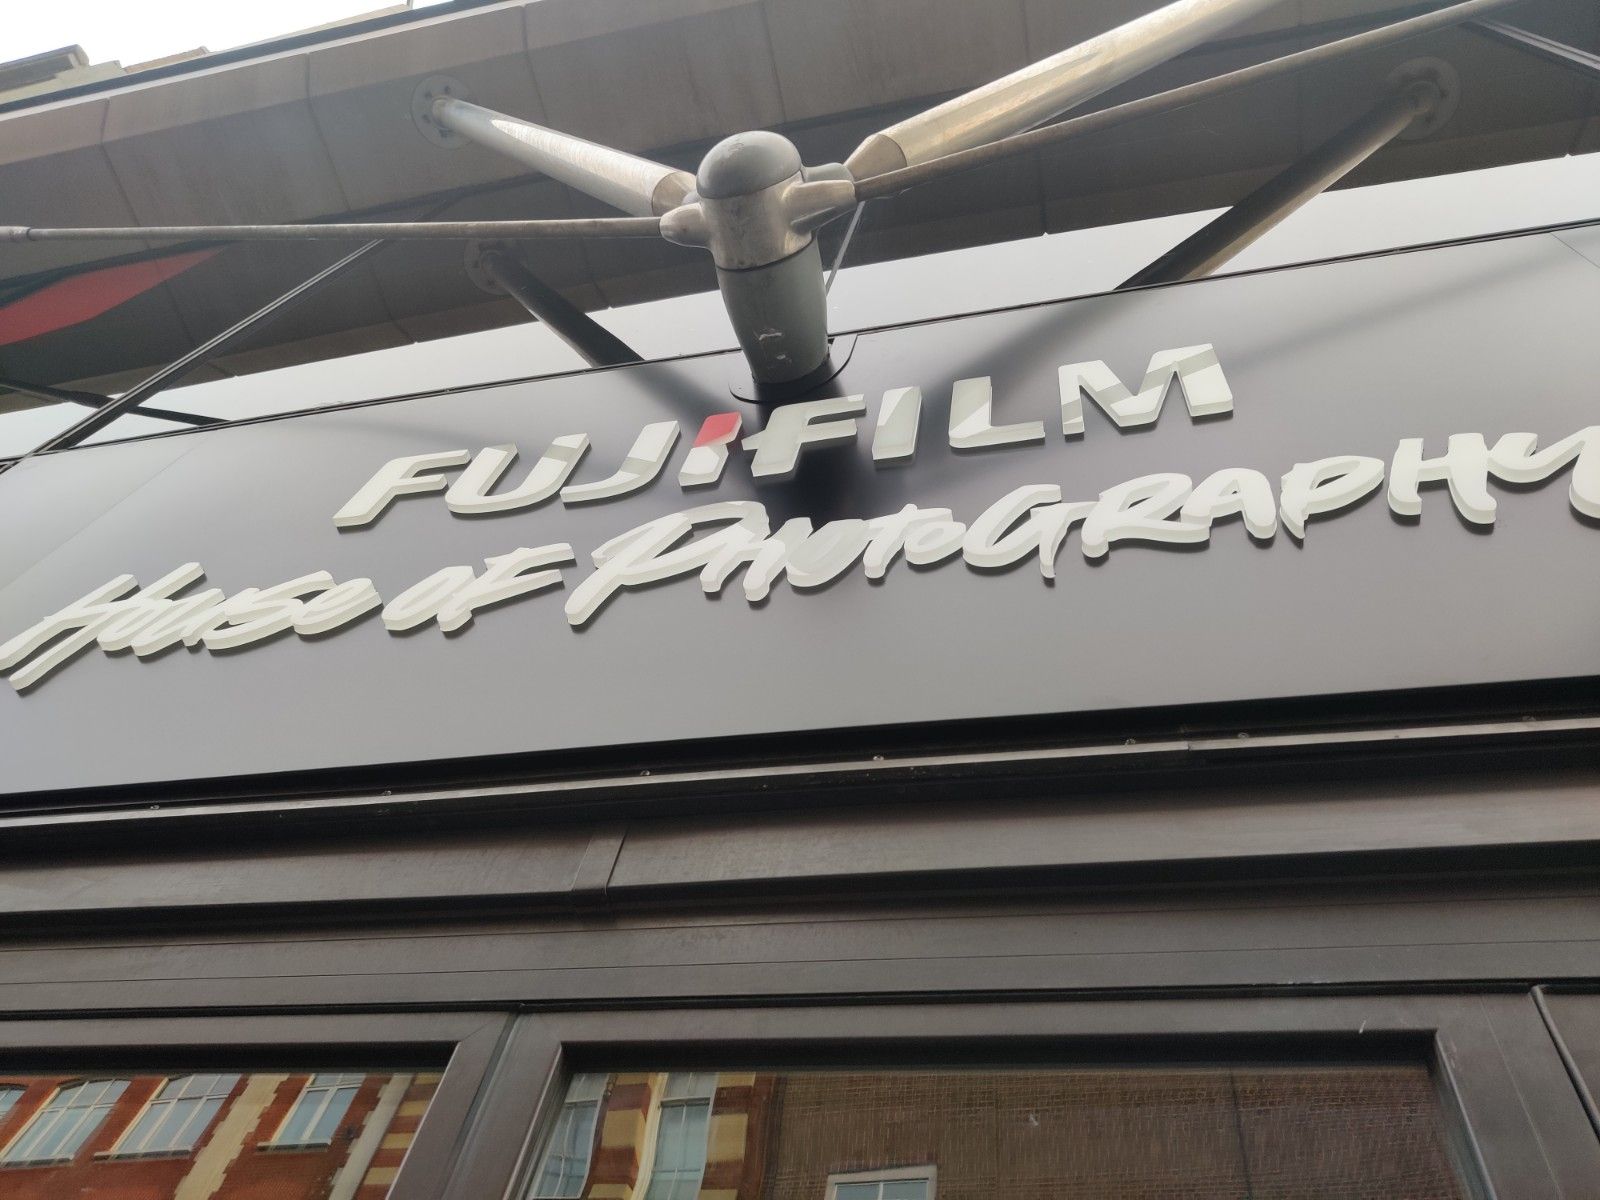 Fujifilm External Illuminated sign